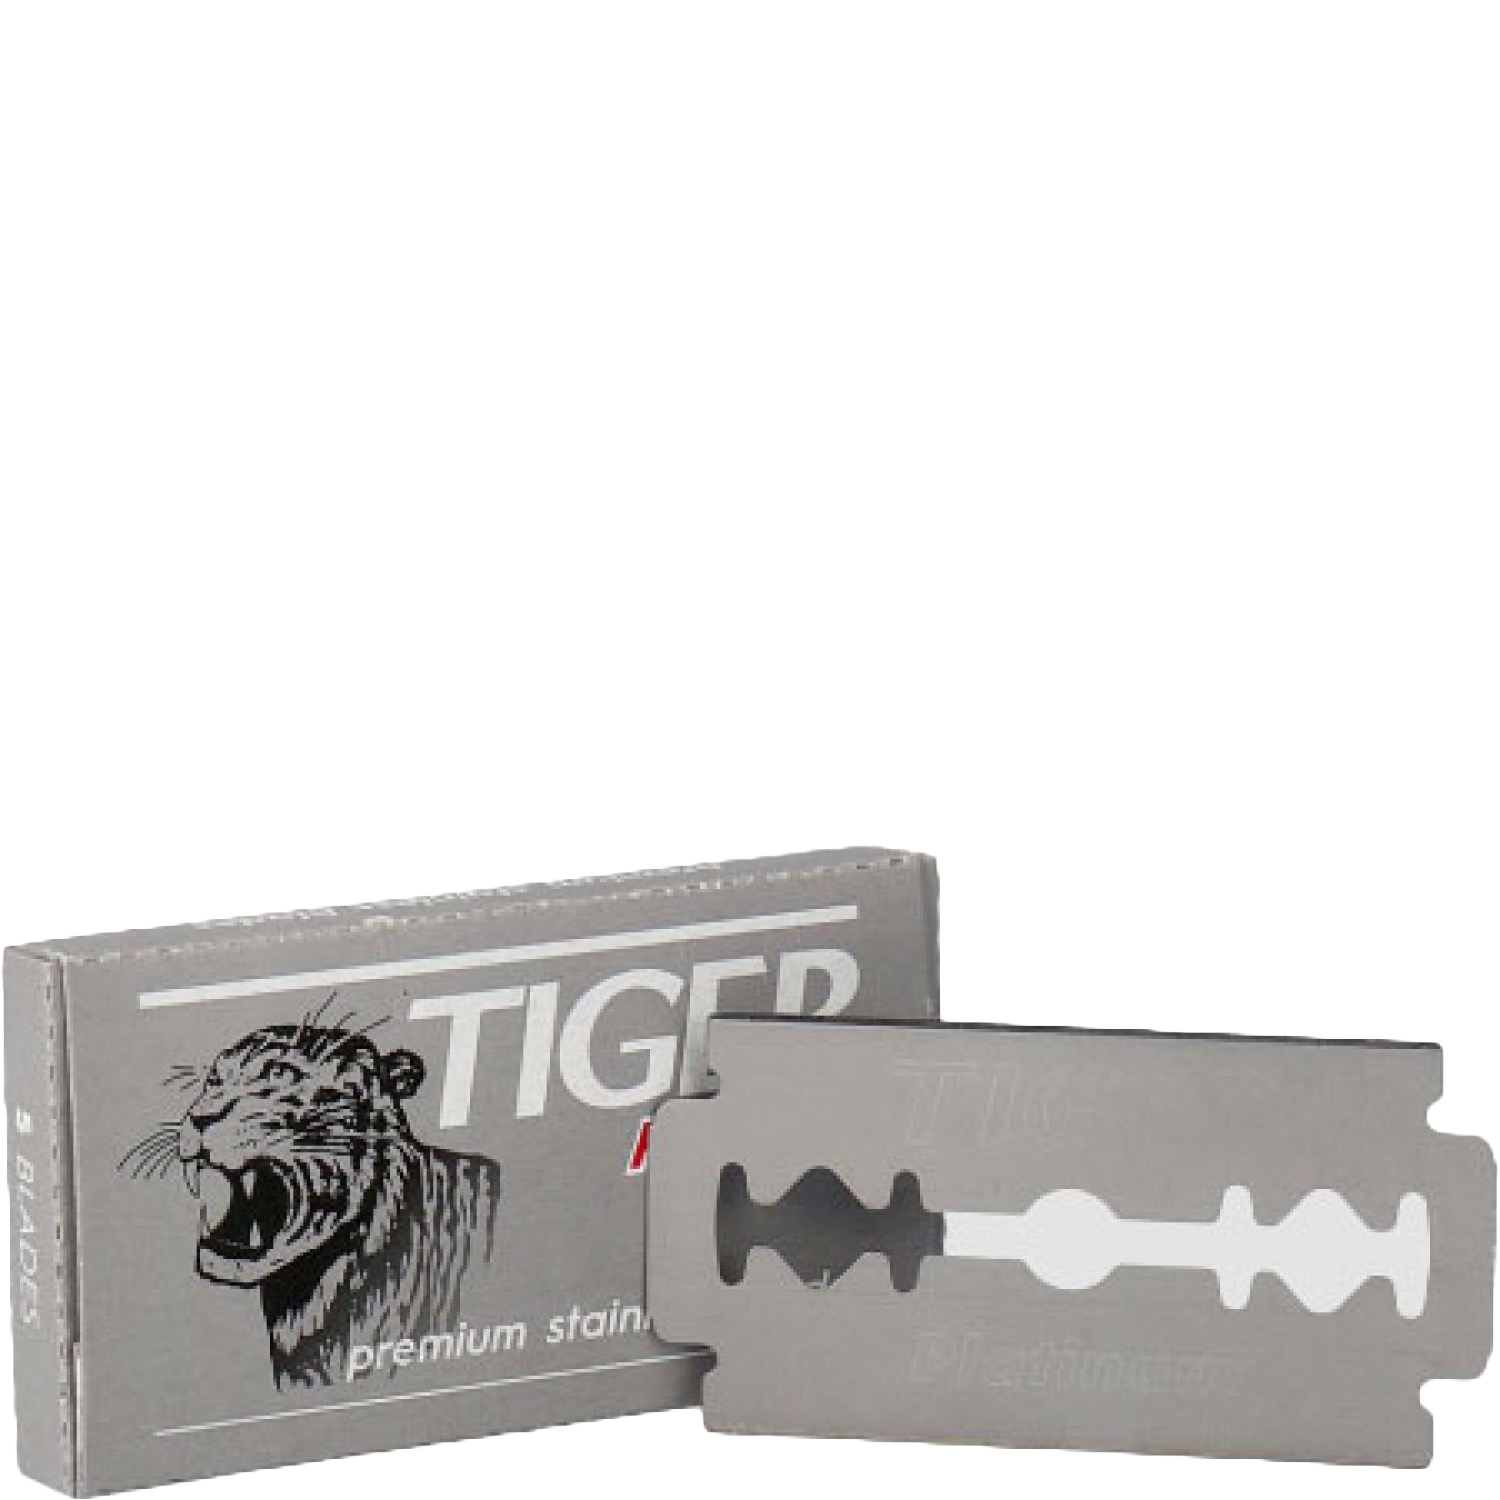 Tiger Platinum Double Edge Blades - 1.4 - DEB-TIGER-PLAT